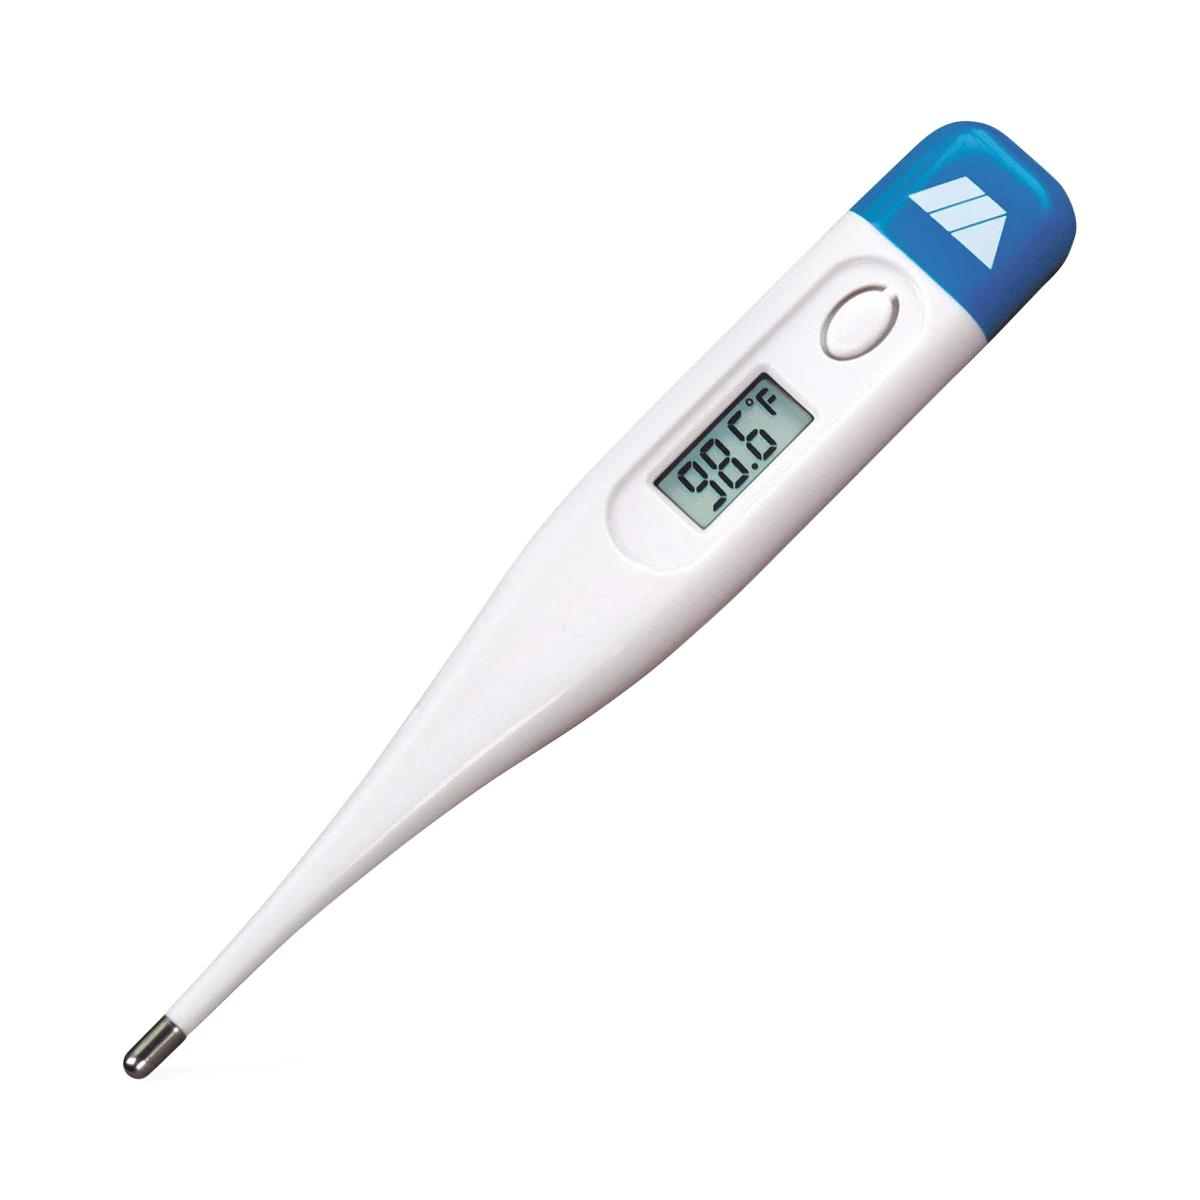 Medline Large Display Digital Thermometers